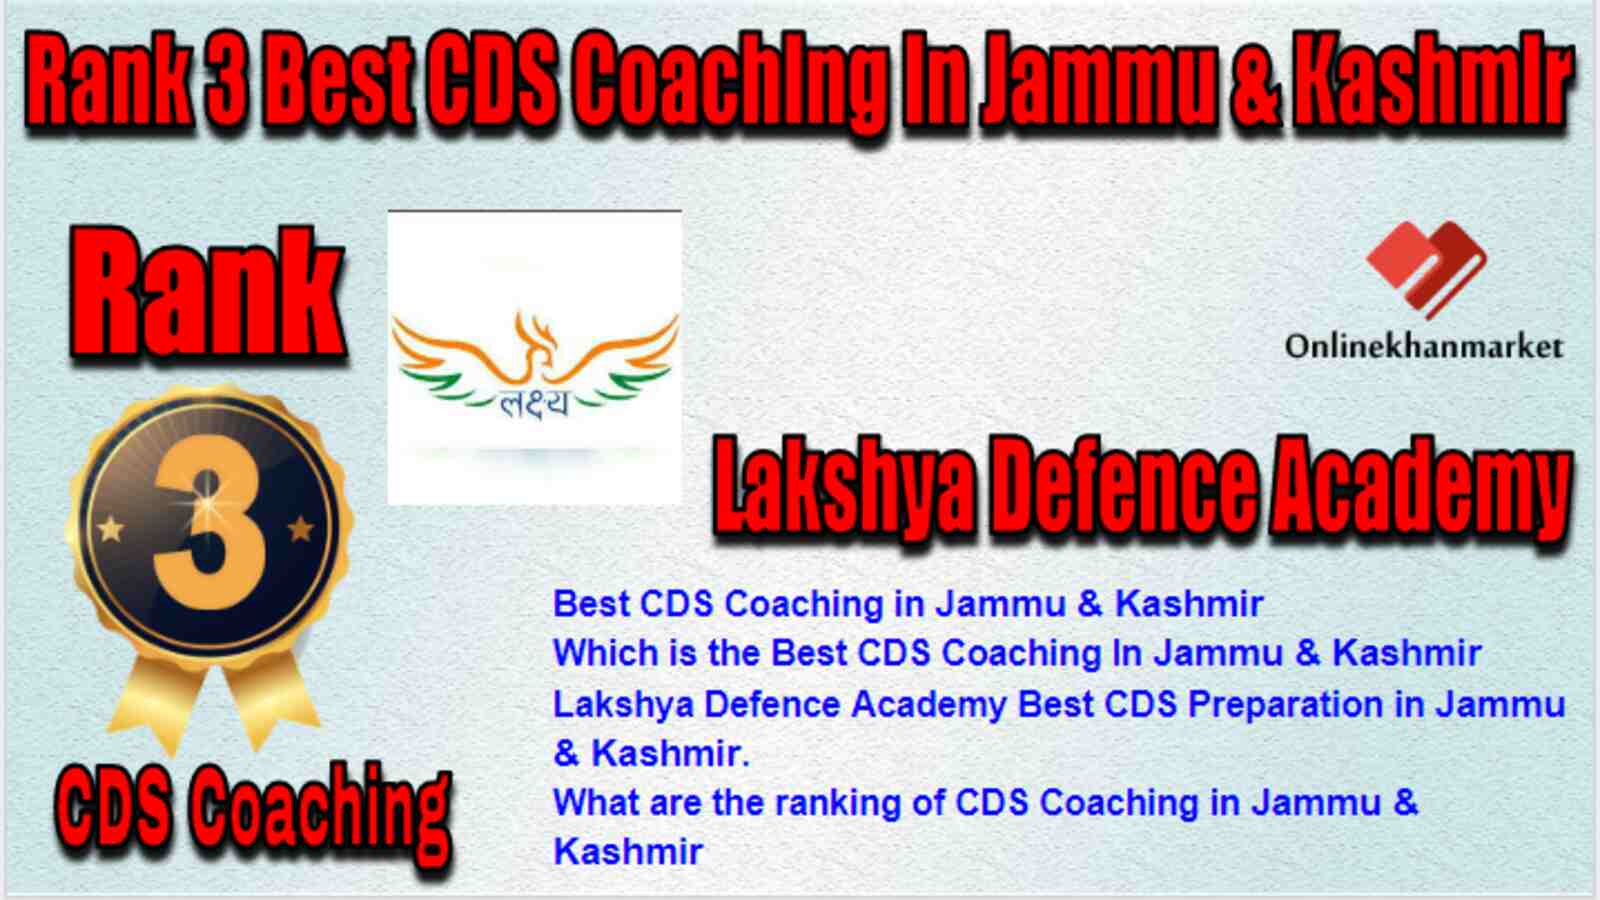 Rank 3 Best CDS Coaching in Jammu & Kashmir